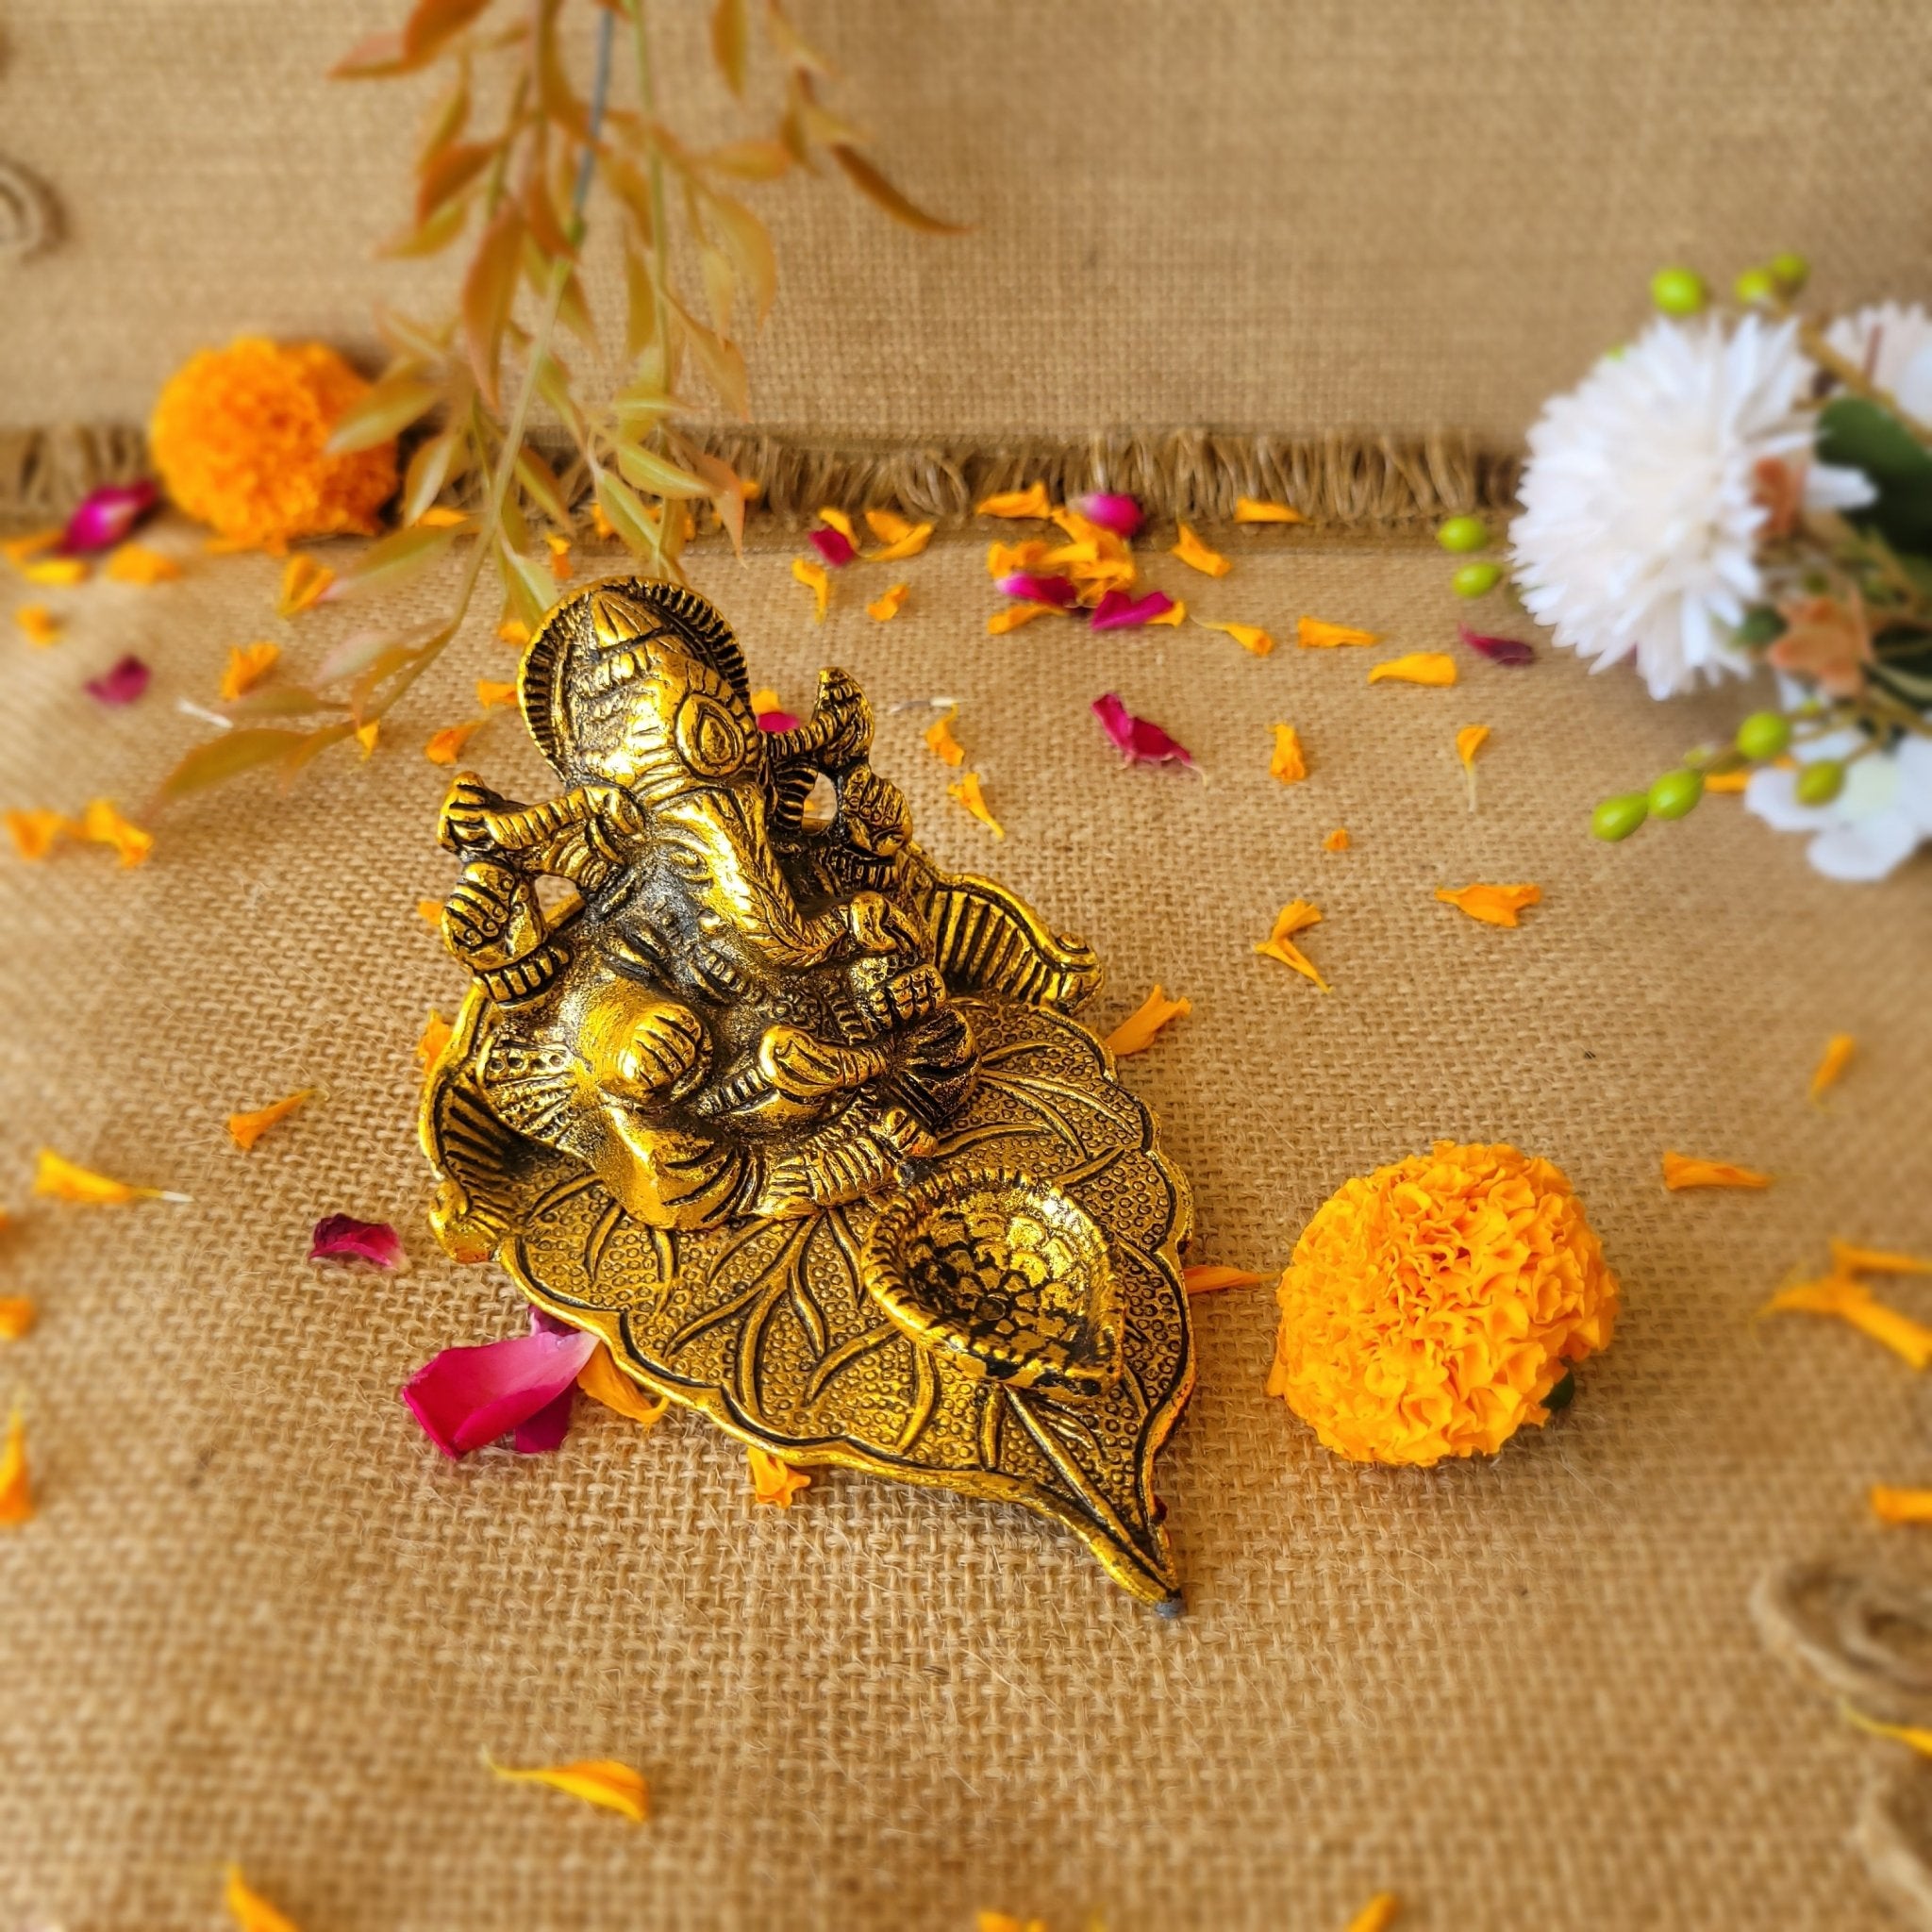 Kavya Creations - Our most beloved deity Ganesha will soon... | Facebook